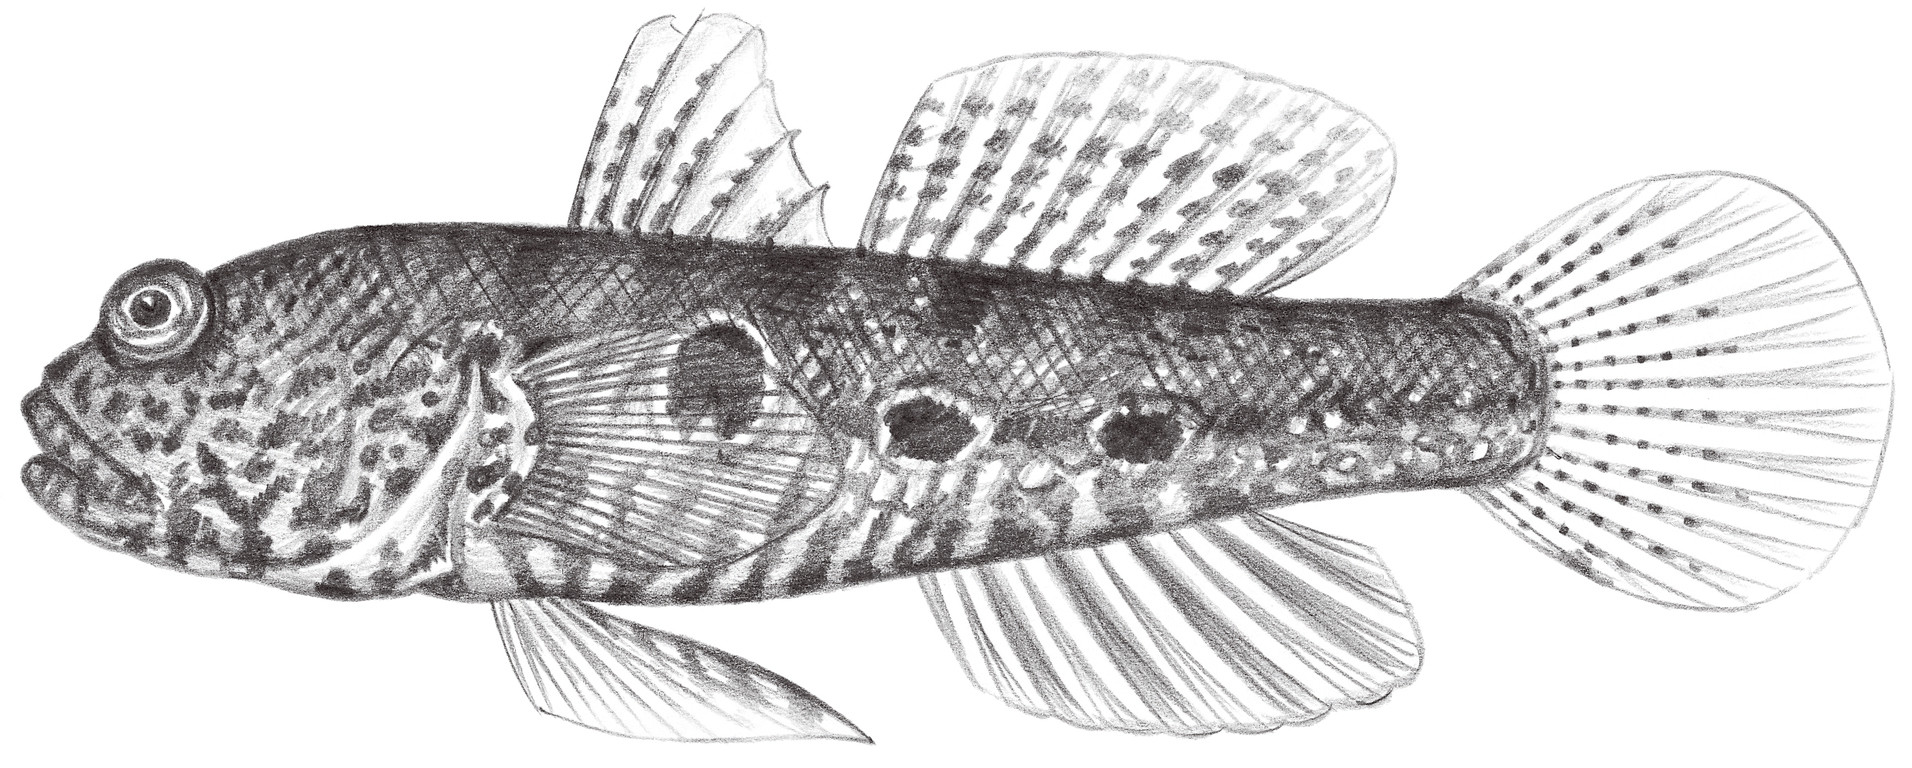 2111.	紋斑猴鯊 Cryptocentrus strigilliceps (Tordan & Seale, 1906)